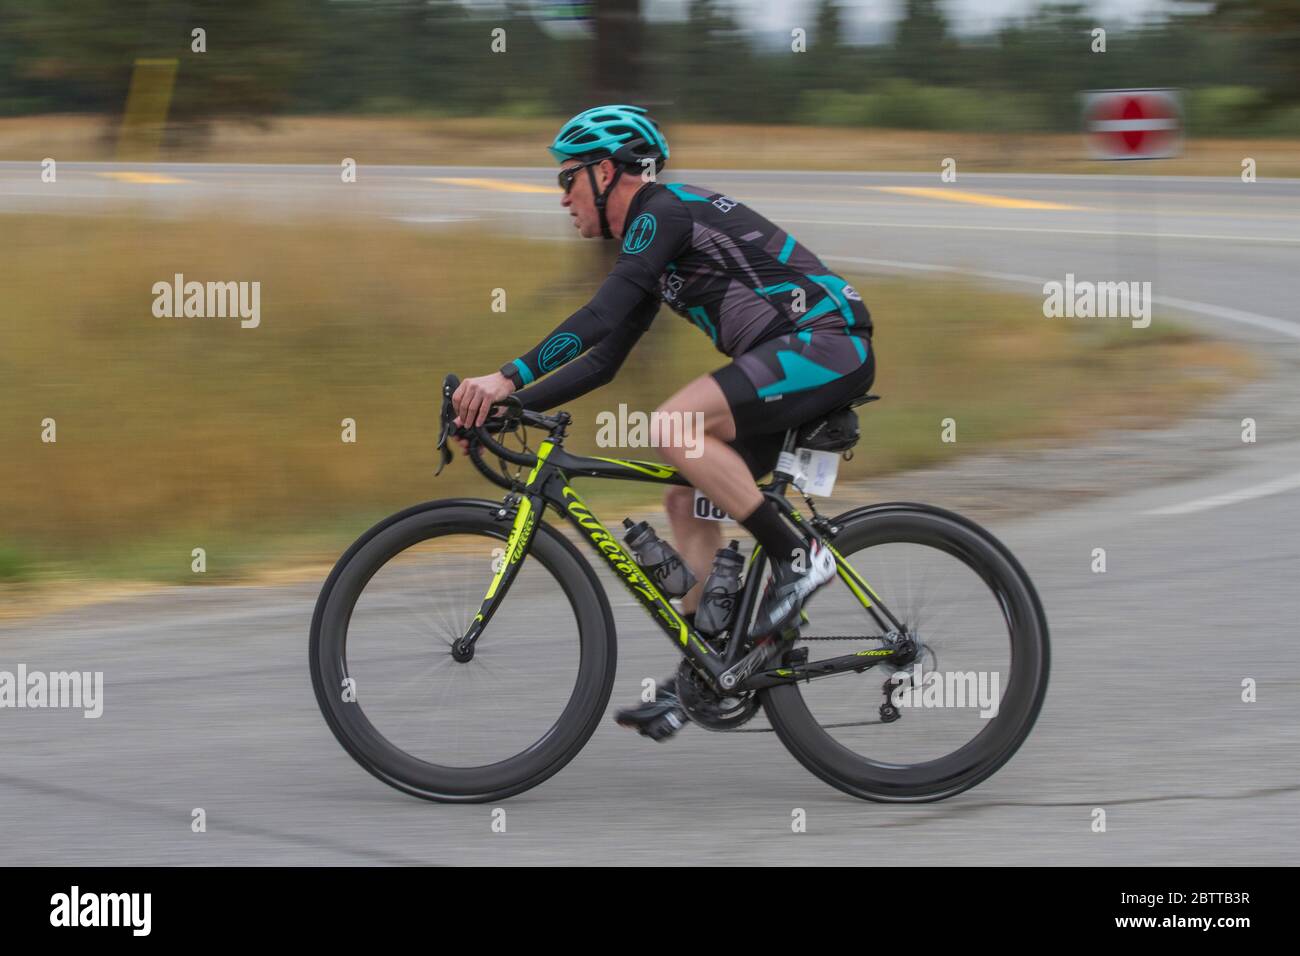 Scenic Bike Race, single rider, in full racing gear and uniform, taking corner Stock Photo